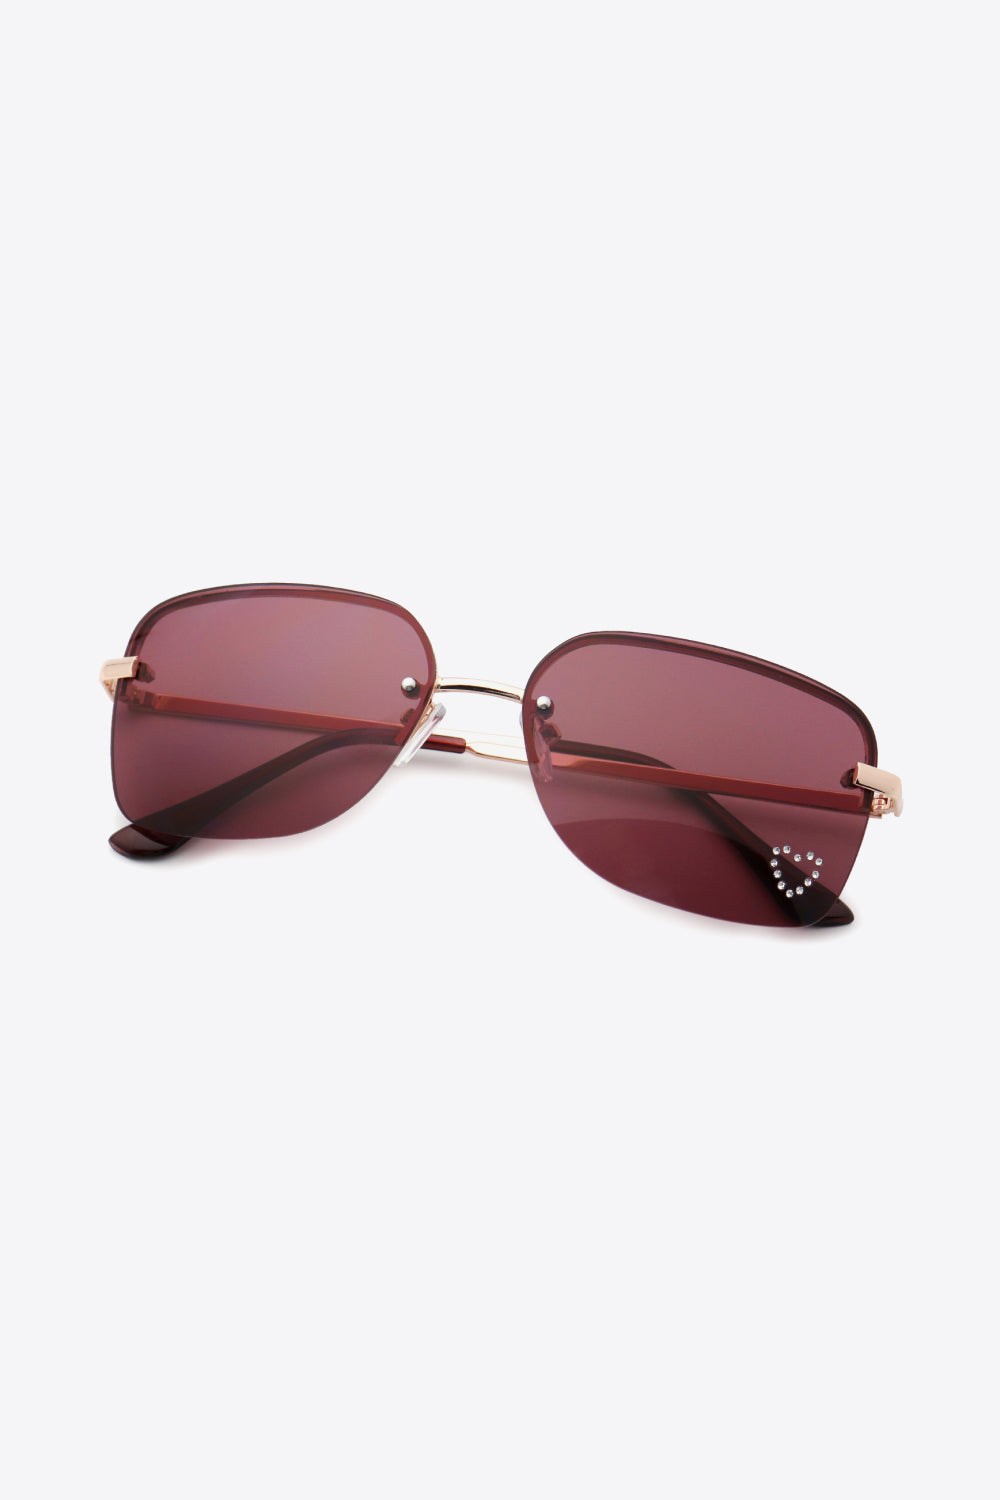 Rhinestone Heart Metal Frame Sunglasses Brown One Size